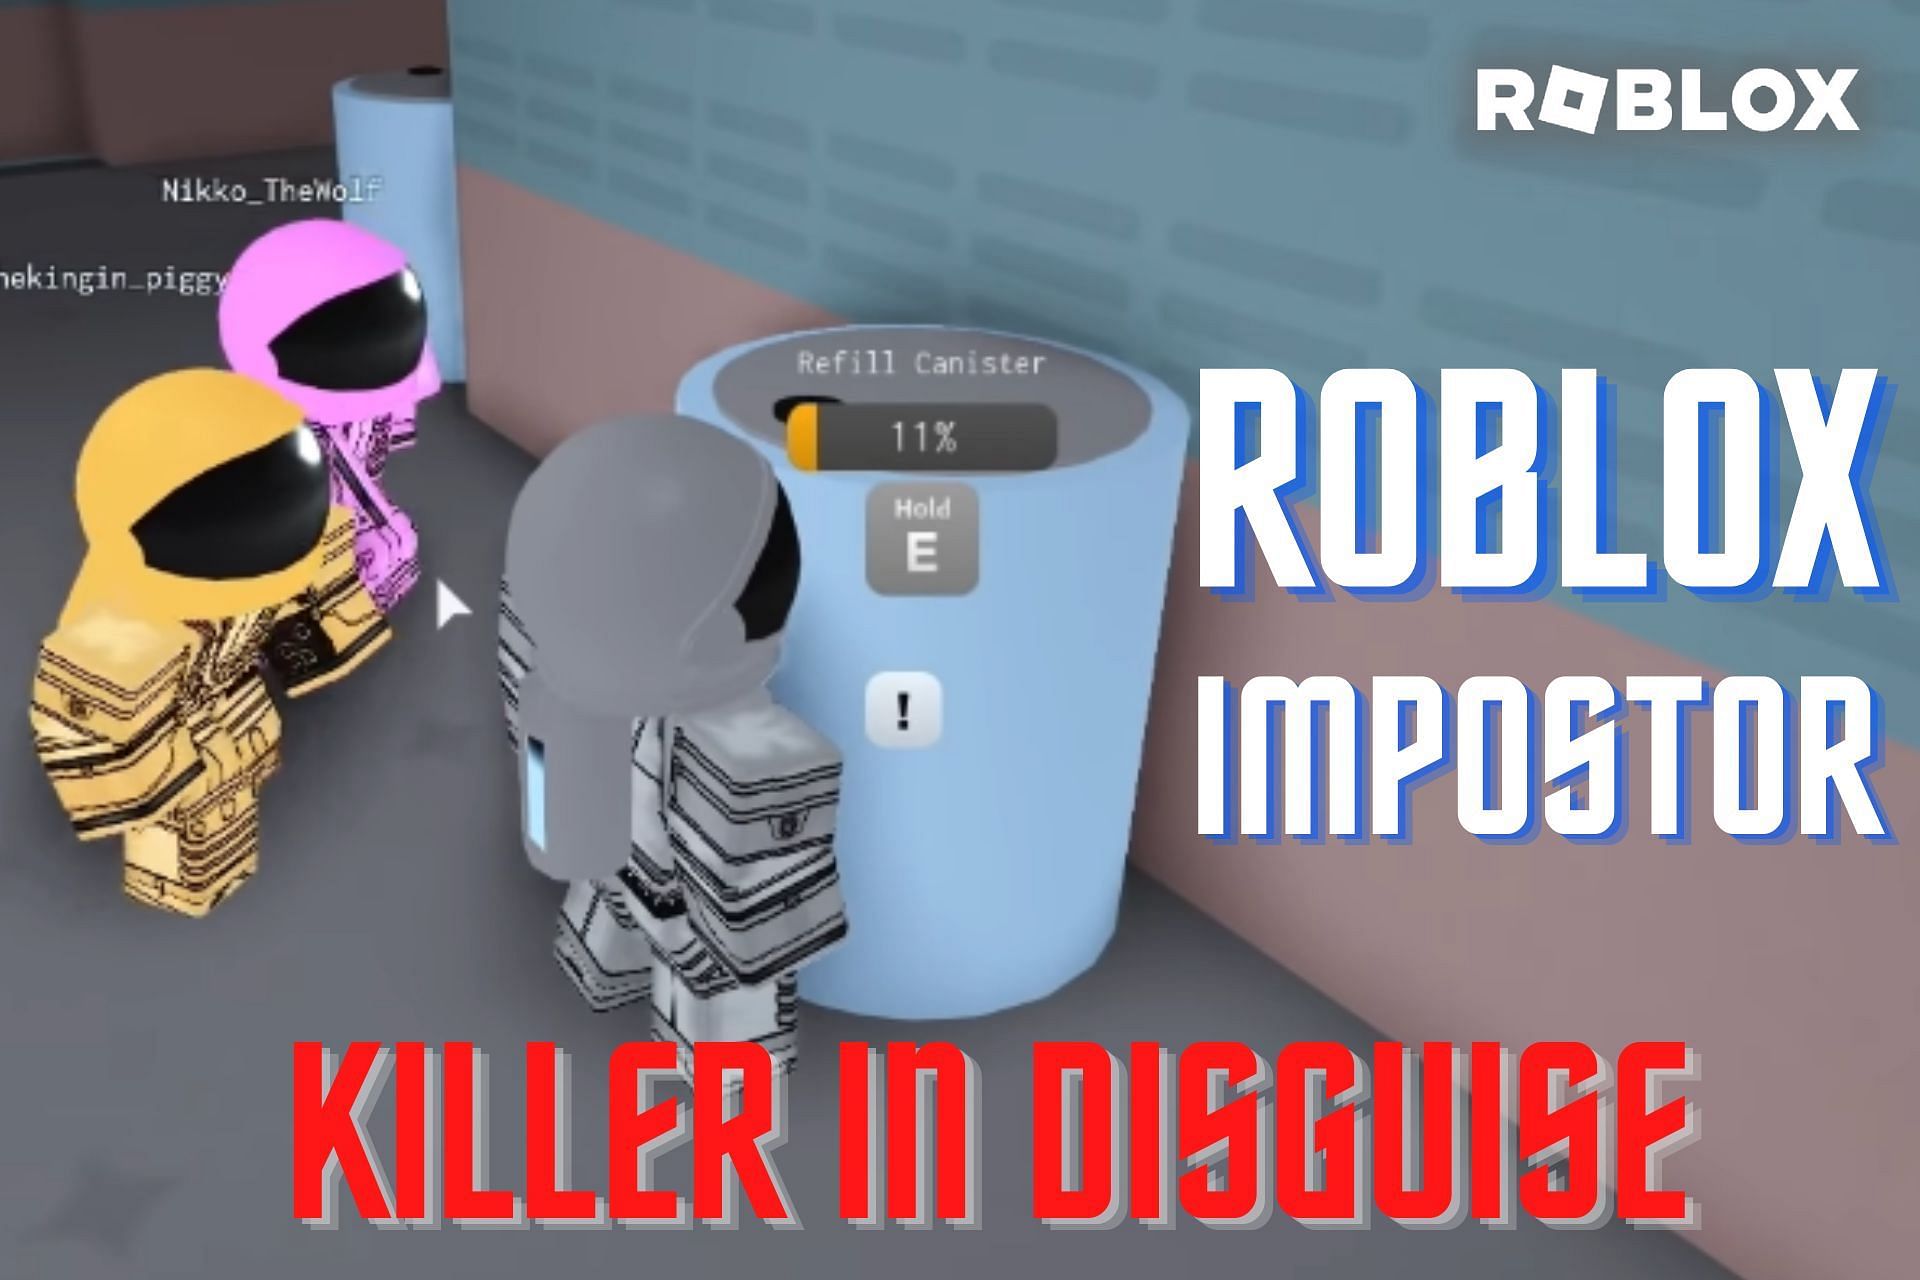 Roblox Survive the Killer Codes (November 2022)